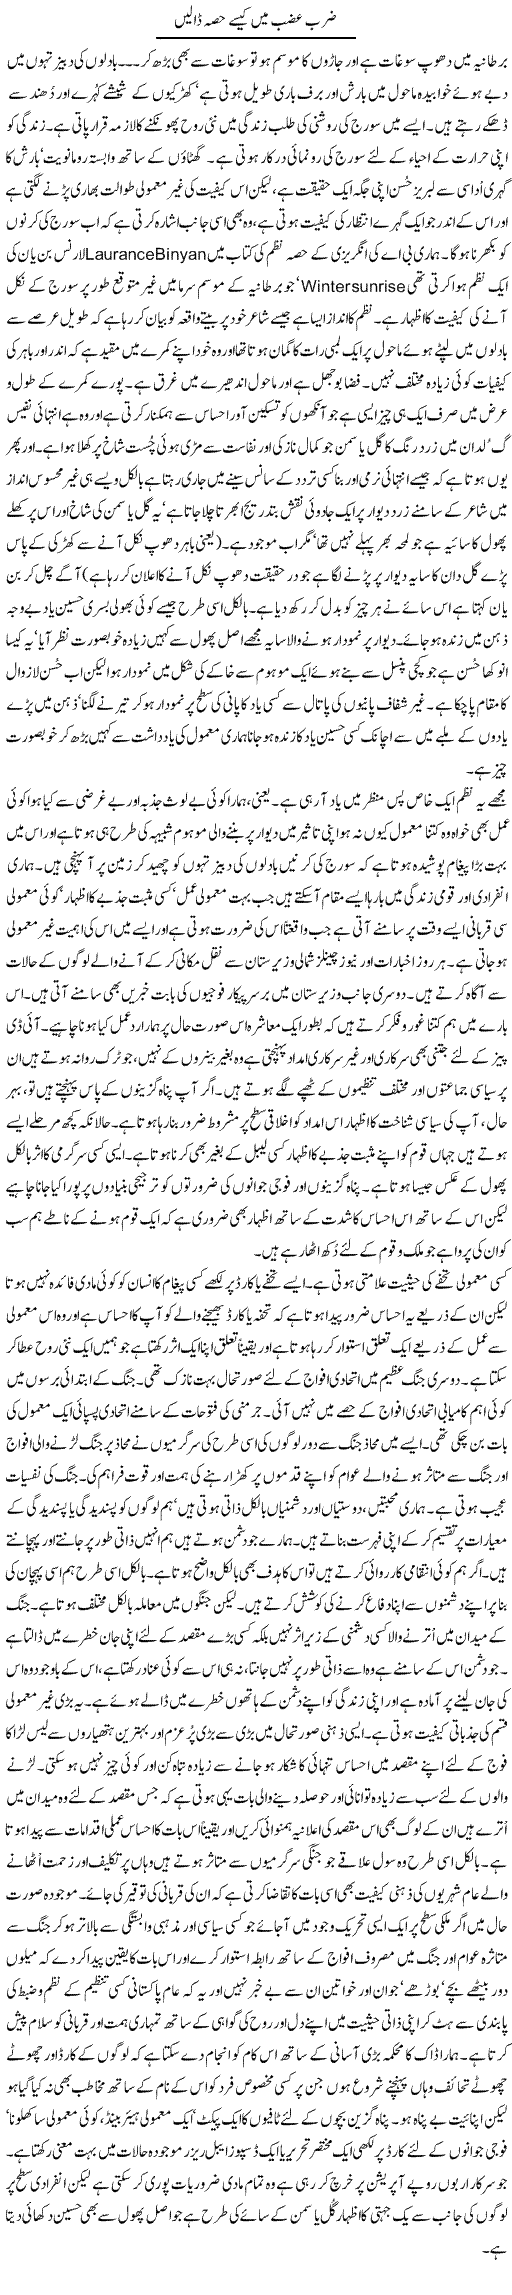 Zarb e Azb Main Kese Hissa Daalain | Ghulam Muhayyu Din | Daily Urdu Columns